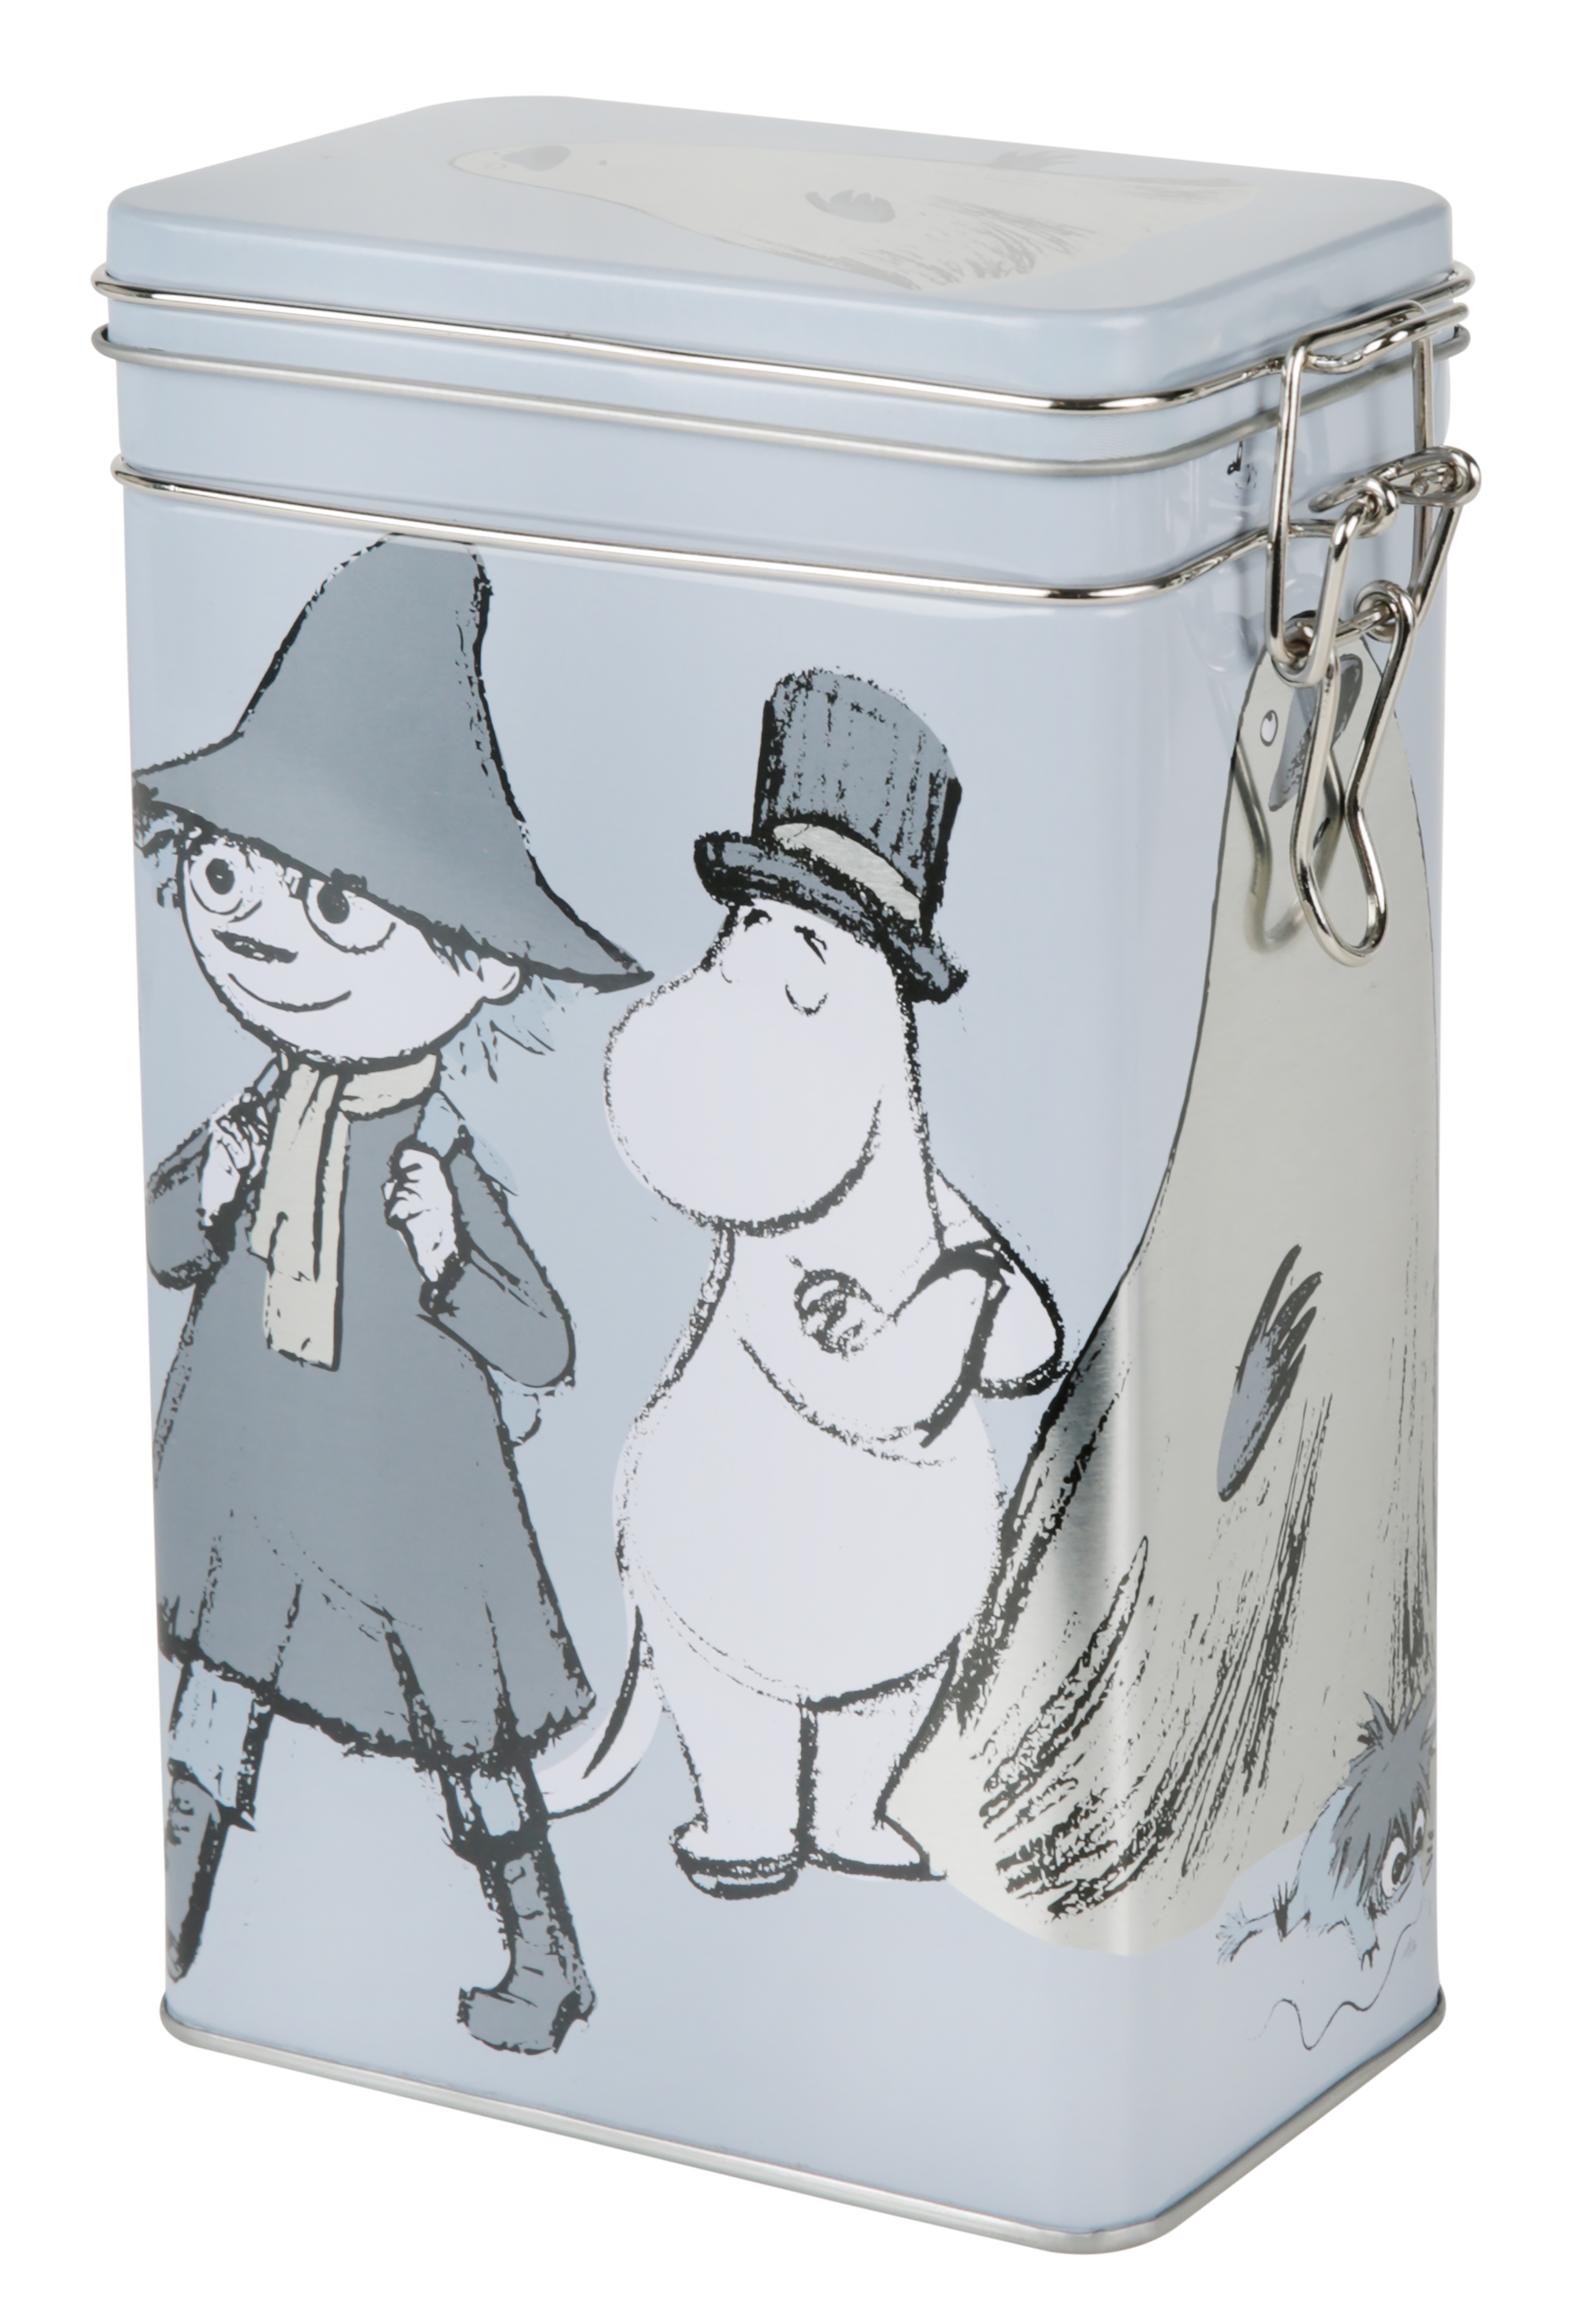 Martinex Moominvalley Sketch Coffee Tin